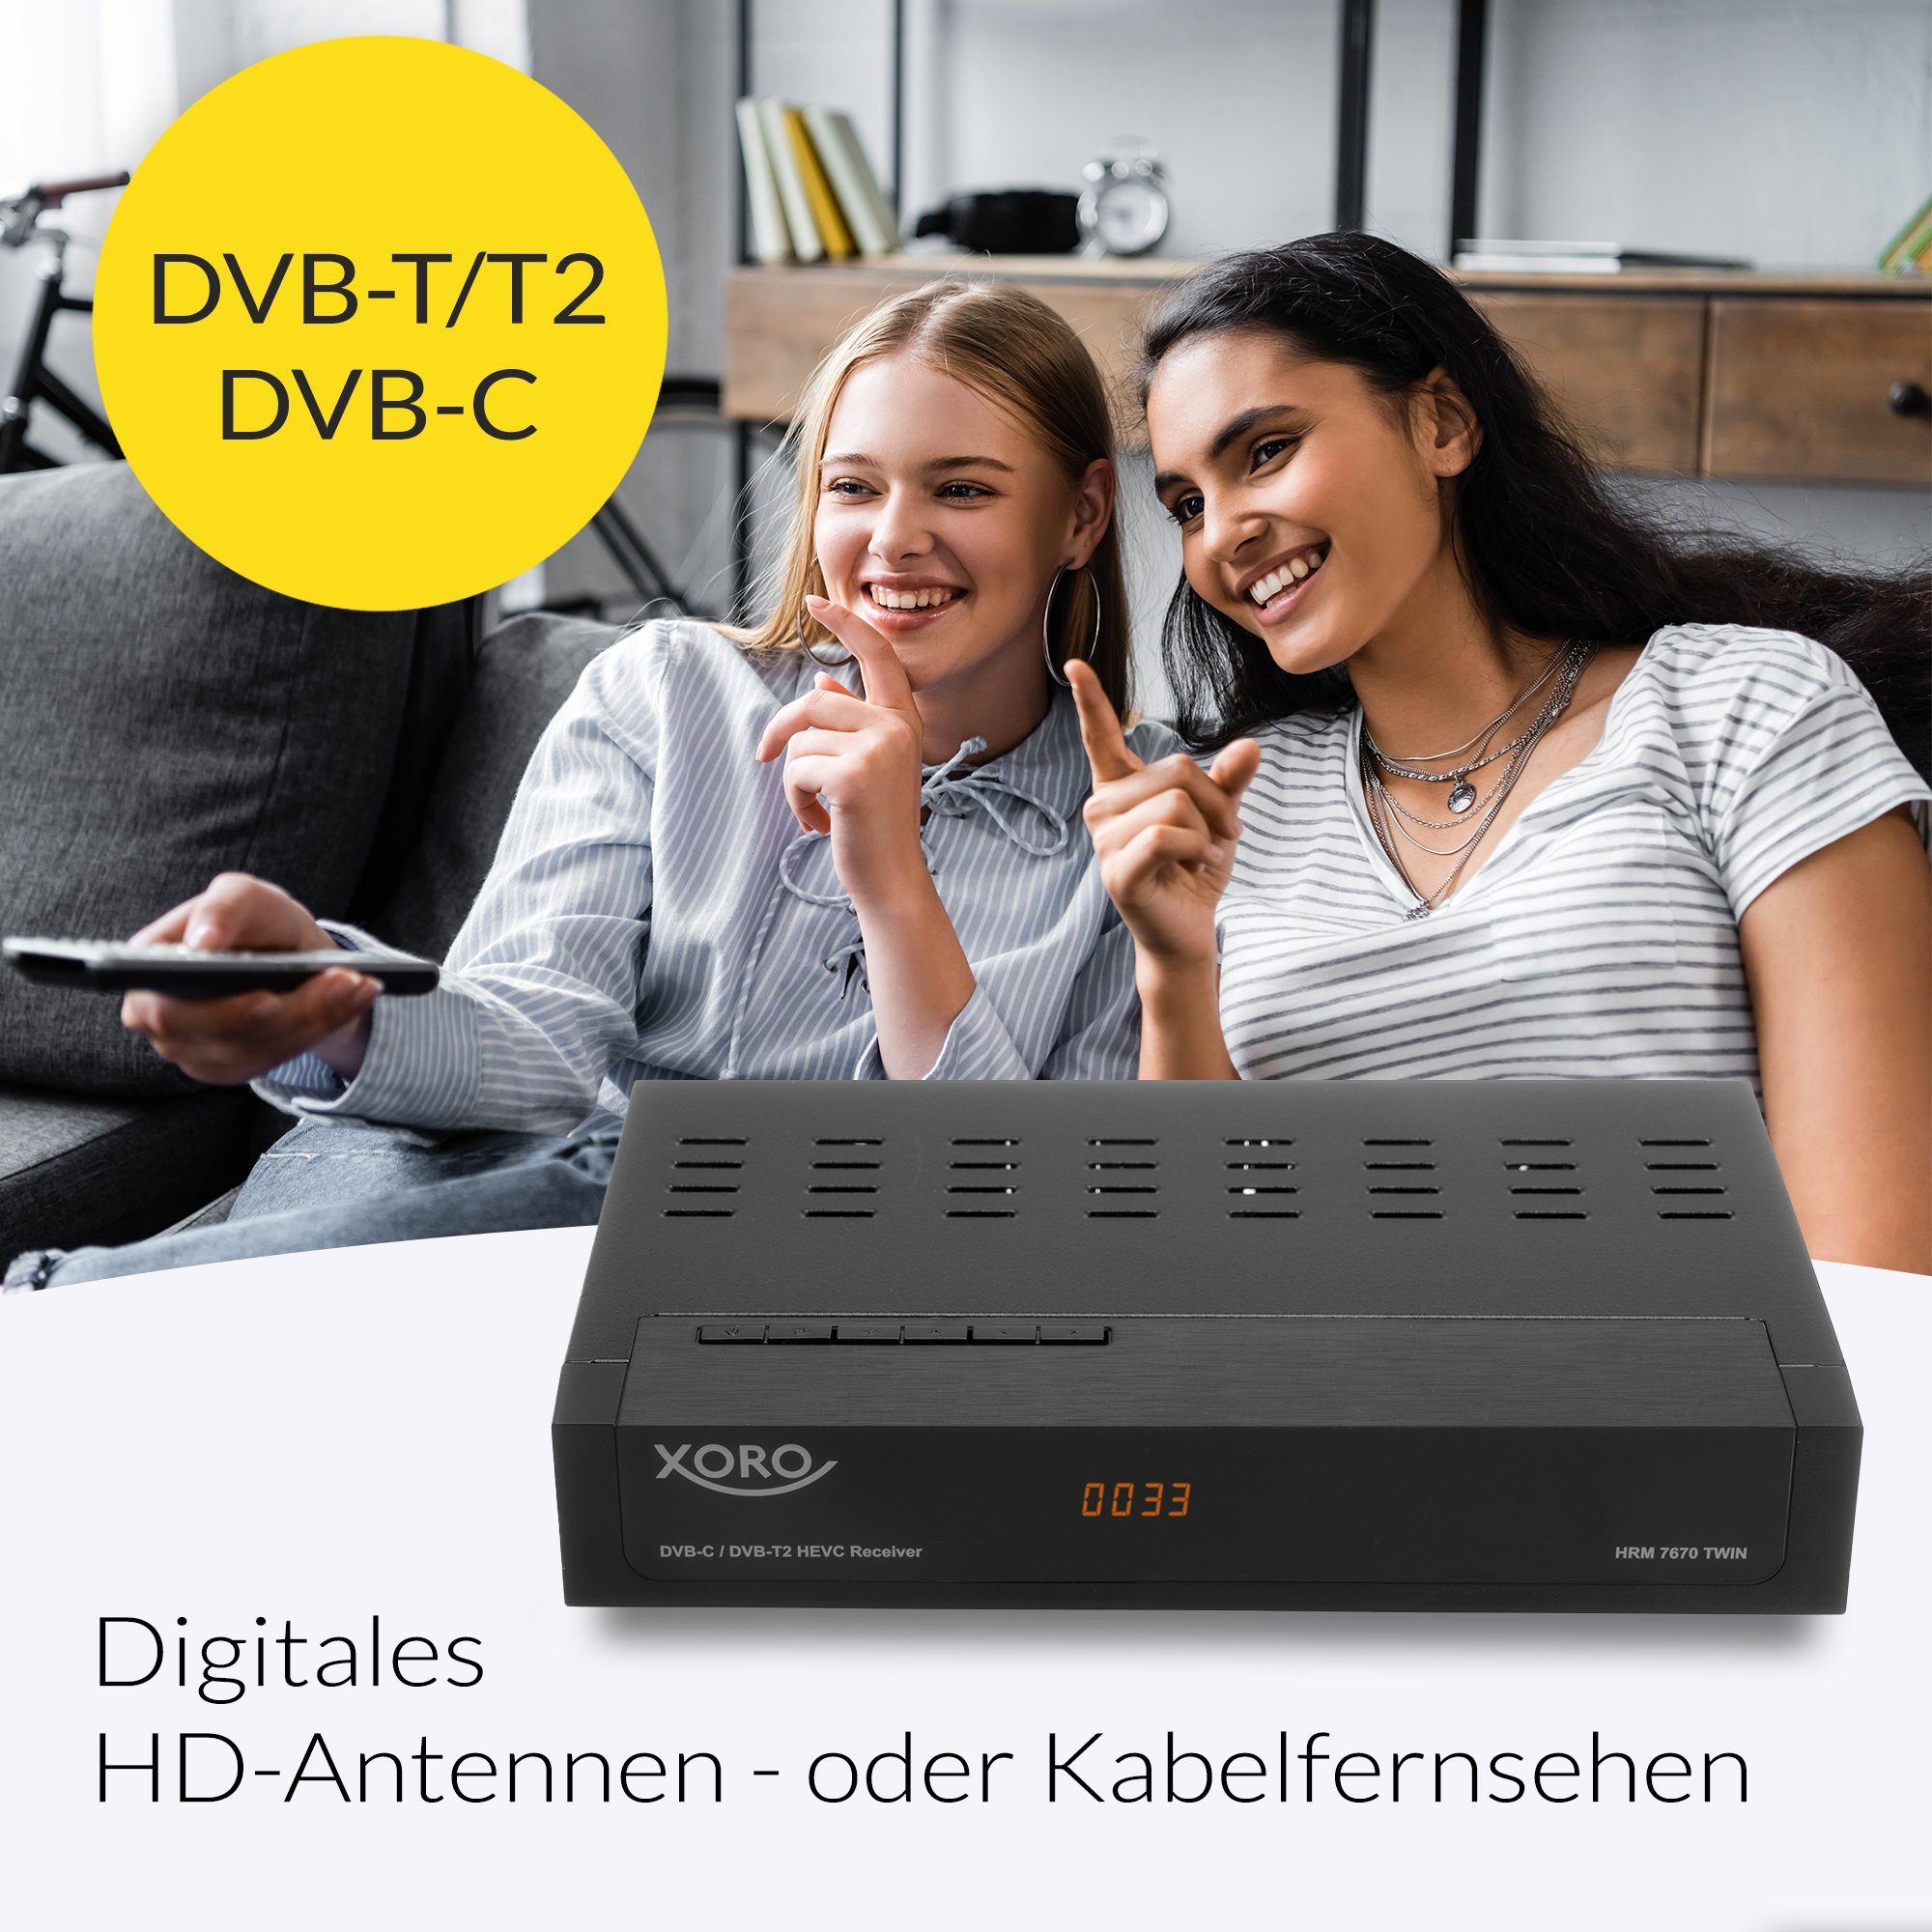 Xoro HRM 7670 Kabel-Receiver FullHD DVB-T/T2/C HEVC - Combo TWIN